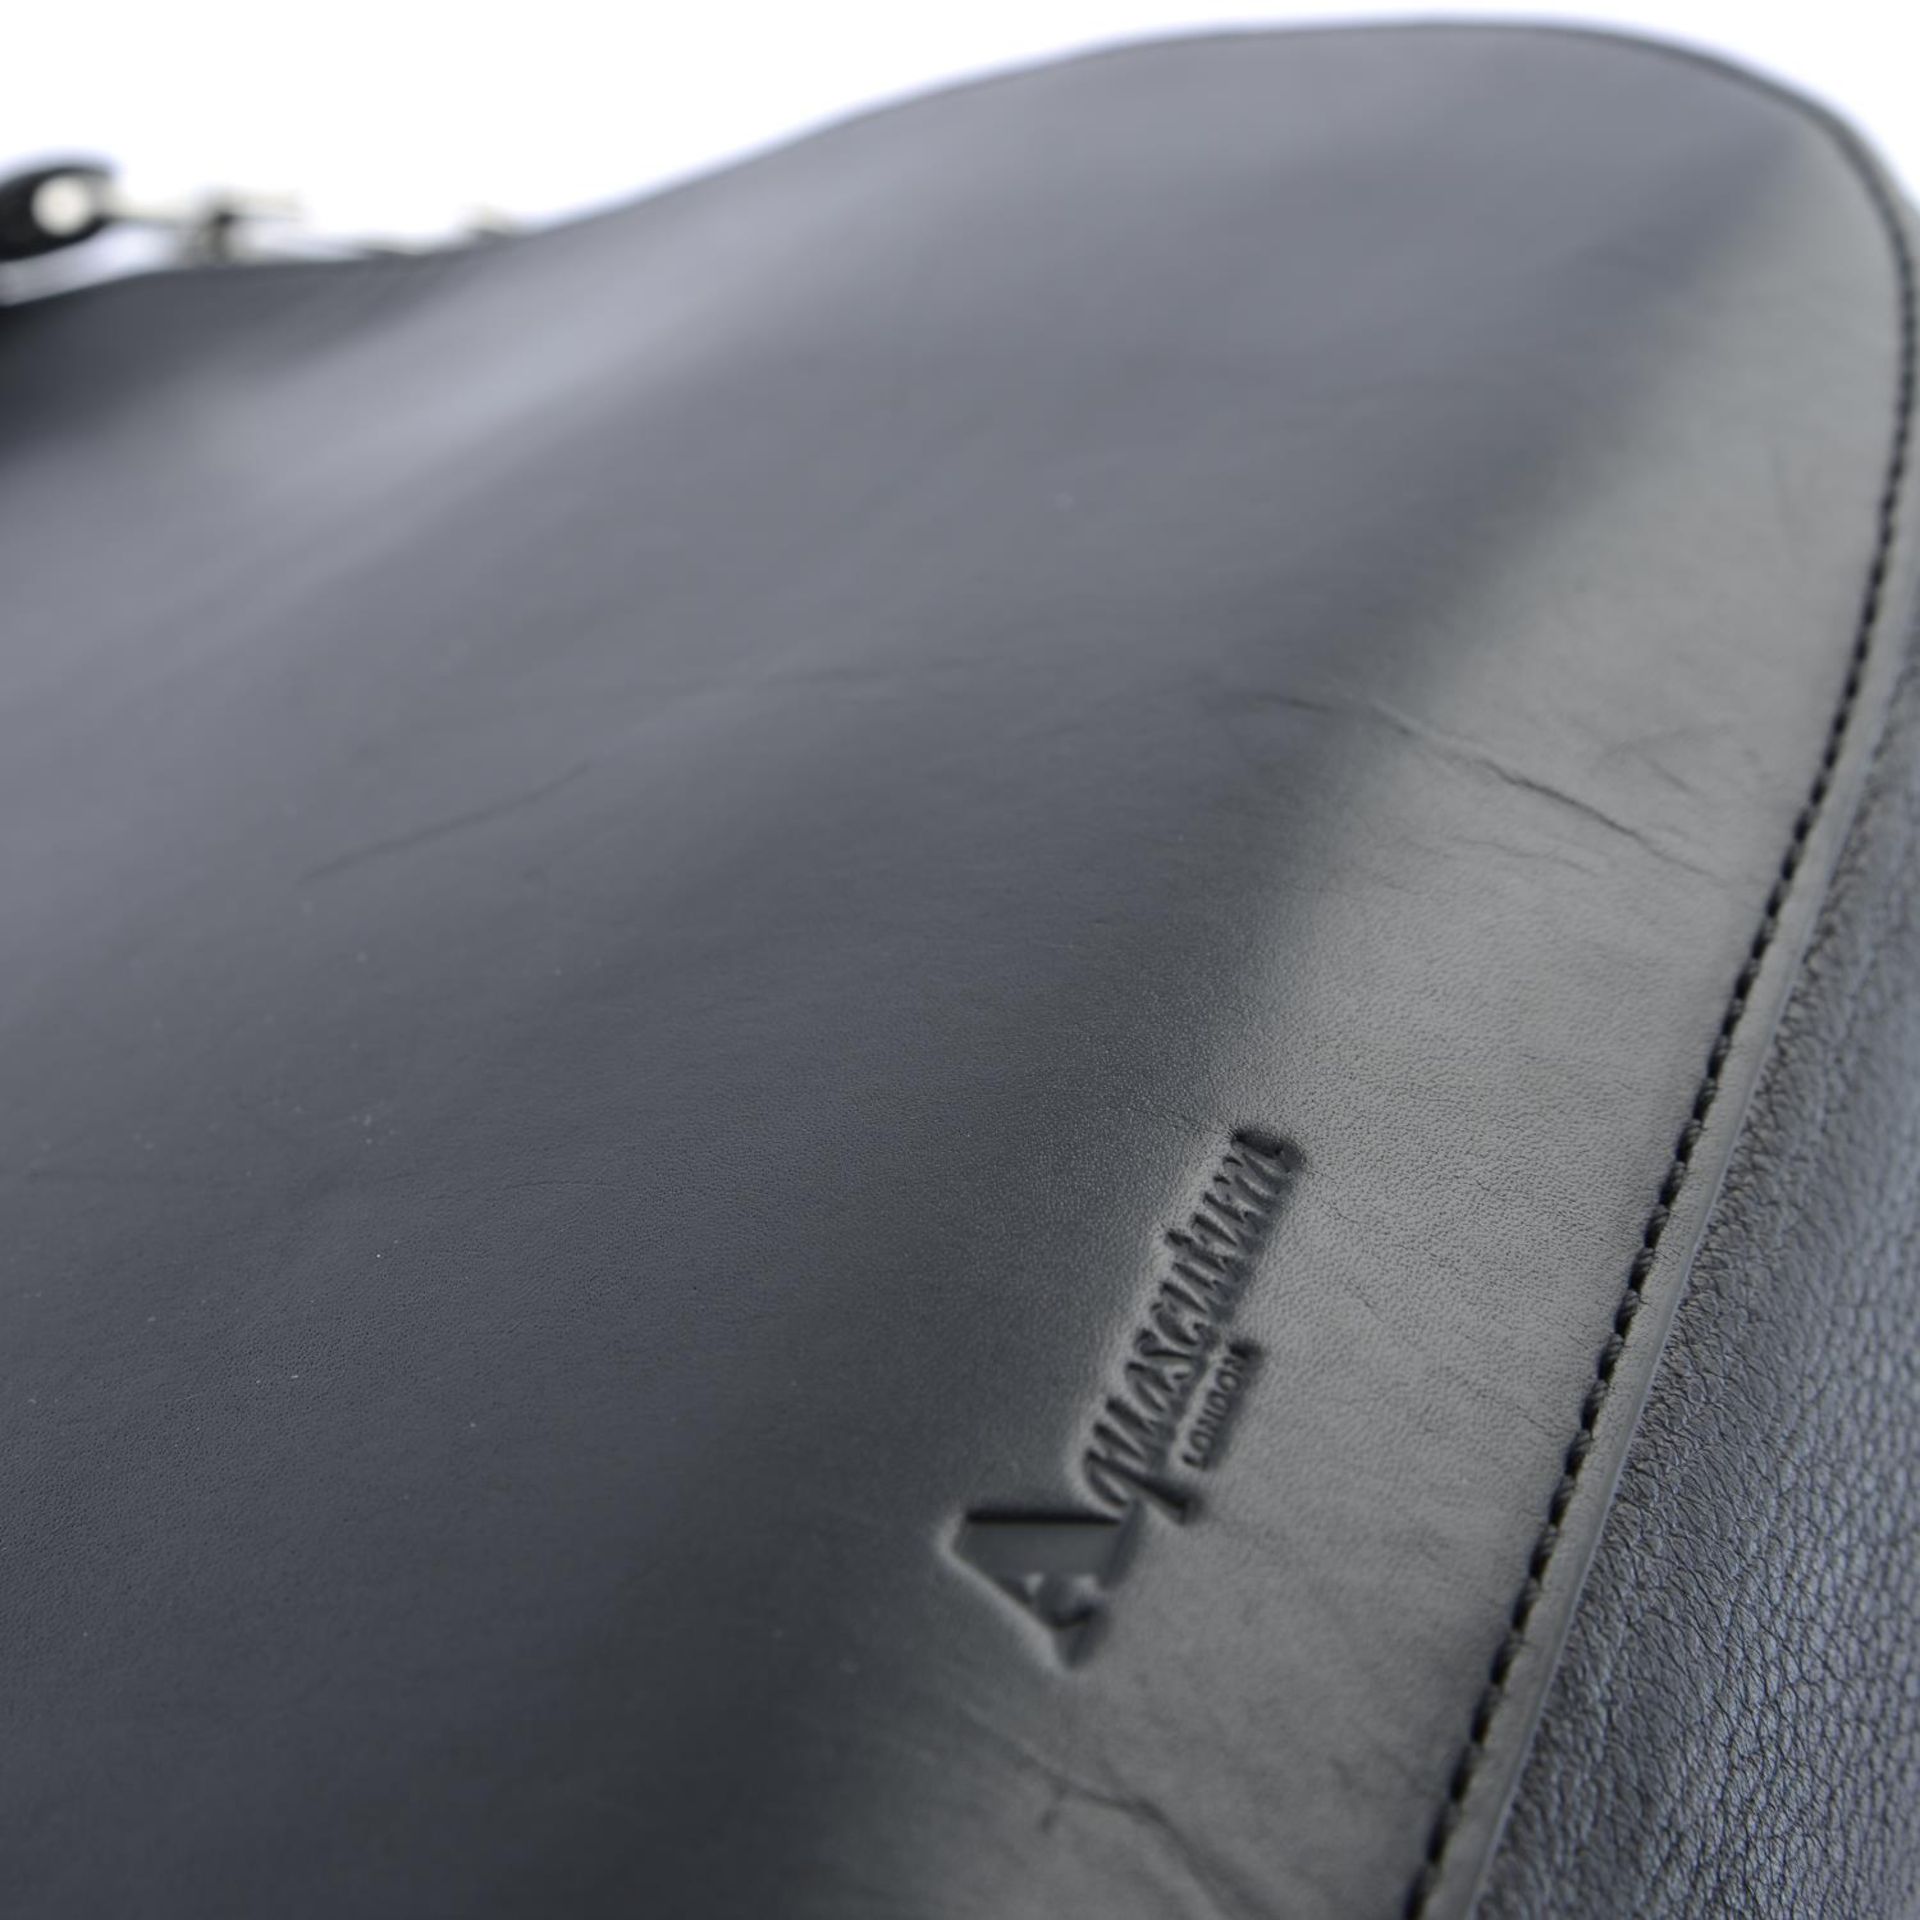 AQUASCUTUM - a black leather satchel. - Image 4 of 6